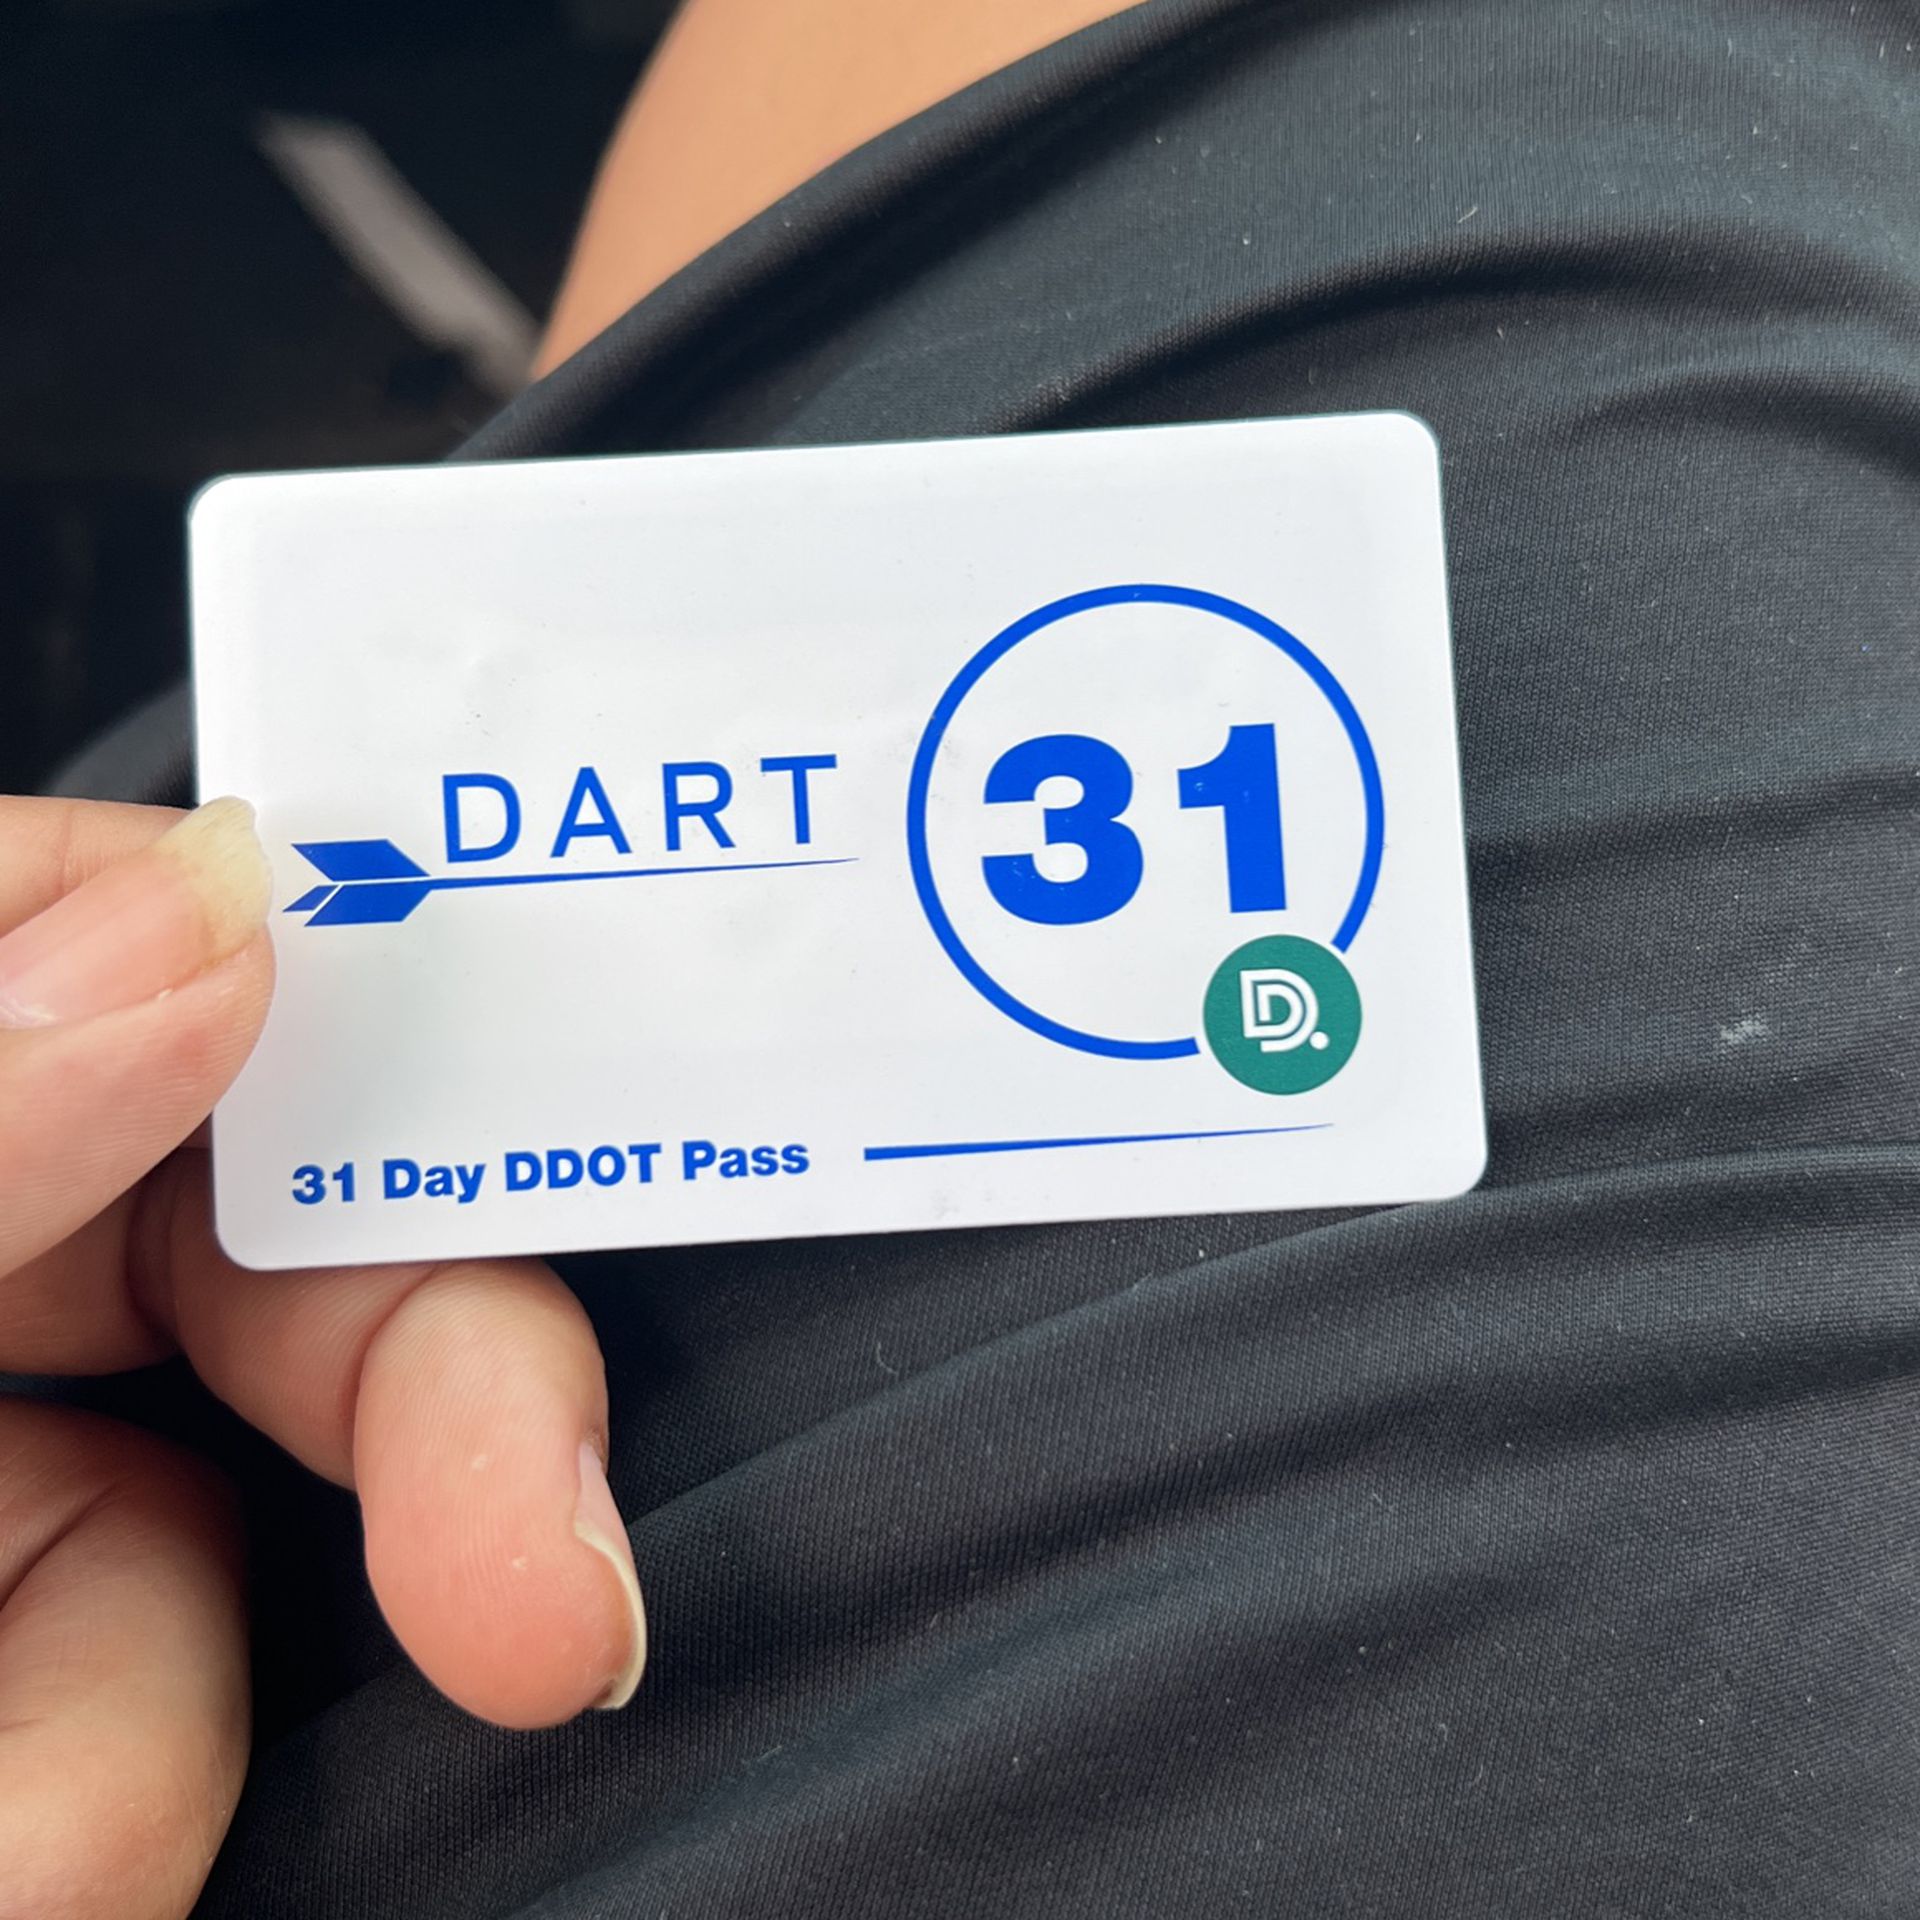 31 Day Bus Pass Smart & DDOT